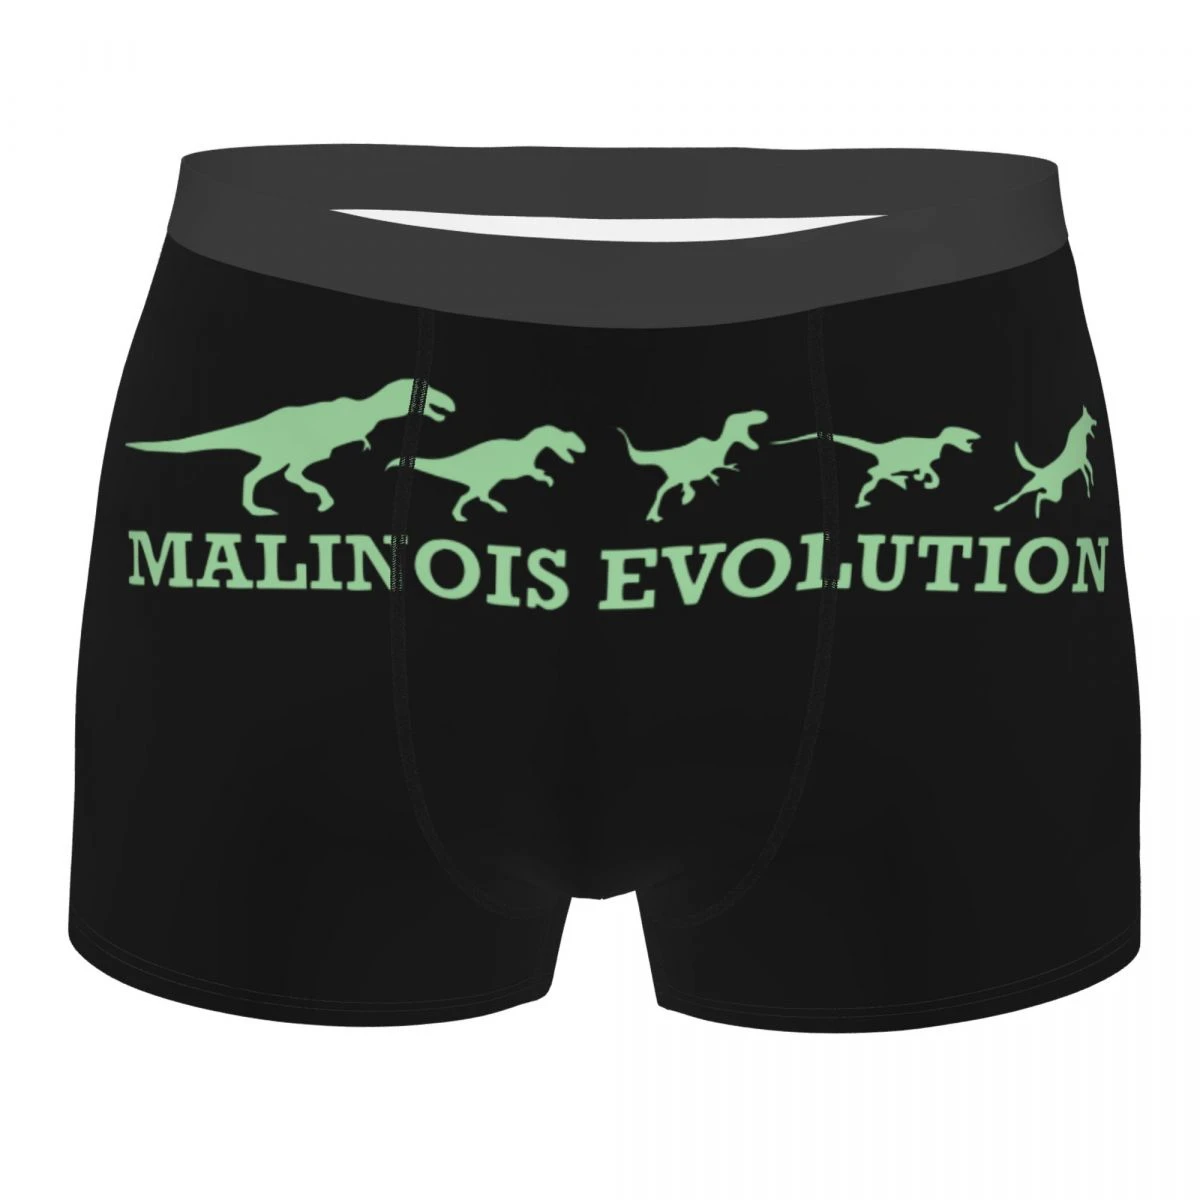 Men Malinois Evolution Underwear Belgian Dog Funny Boxer Briefs Shorts Panties Homme Mid Waist Underpants S-XXL cheap underwear for men